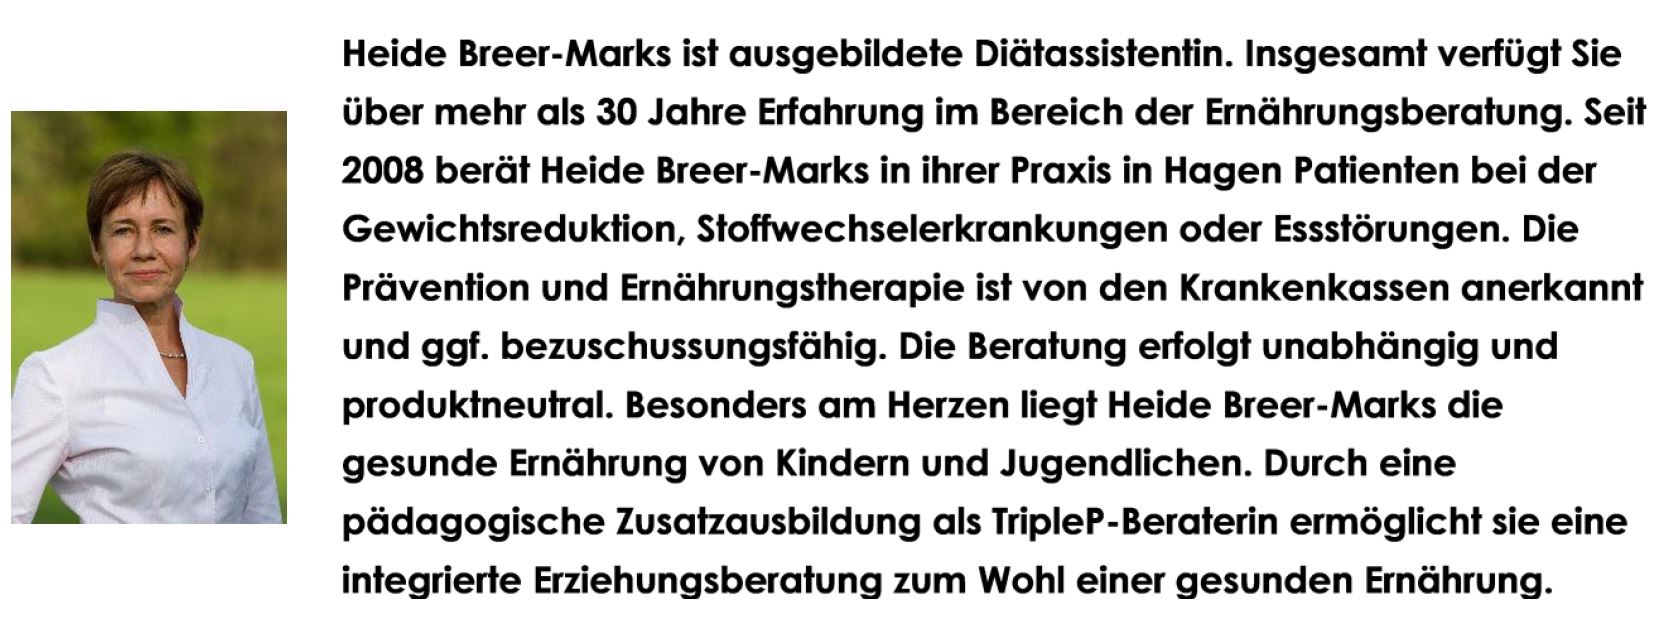 Ernährungsberatung Heide Breer-Marks.JPG